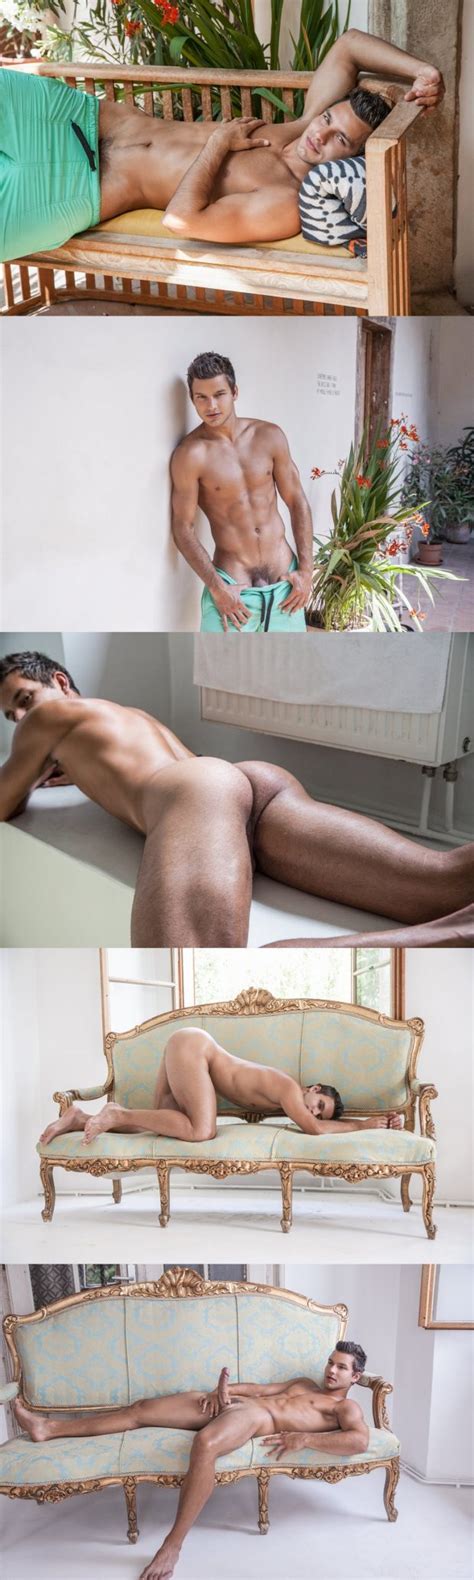 Marc Ruffalo Summer Break Art Collection By Rick Day Bel Ami Online No Es Otro Blog Gay